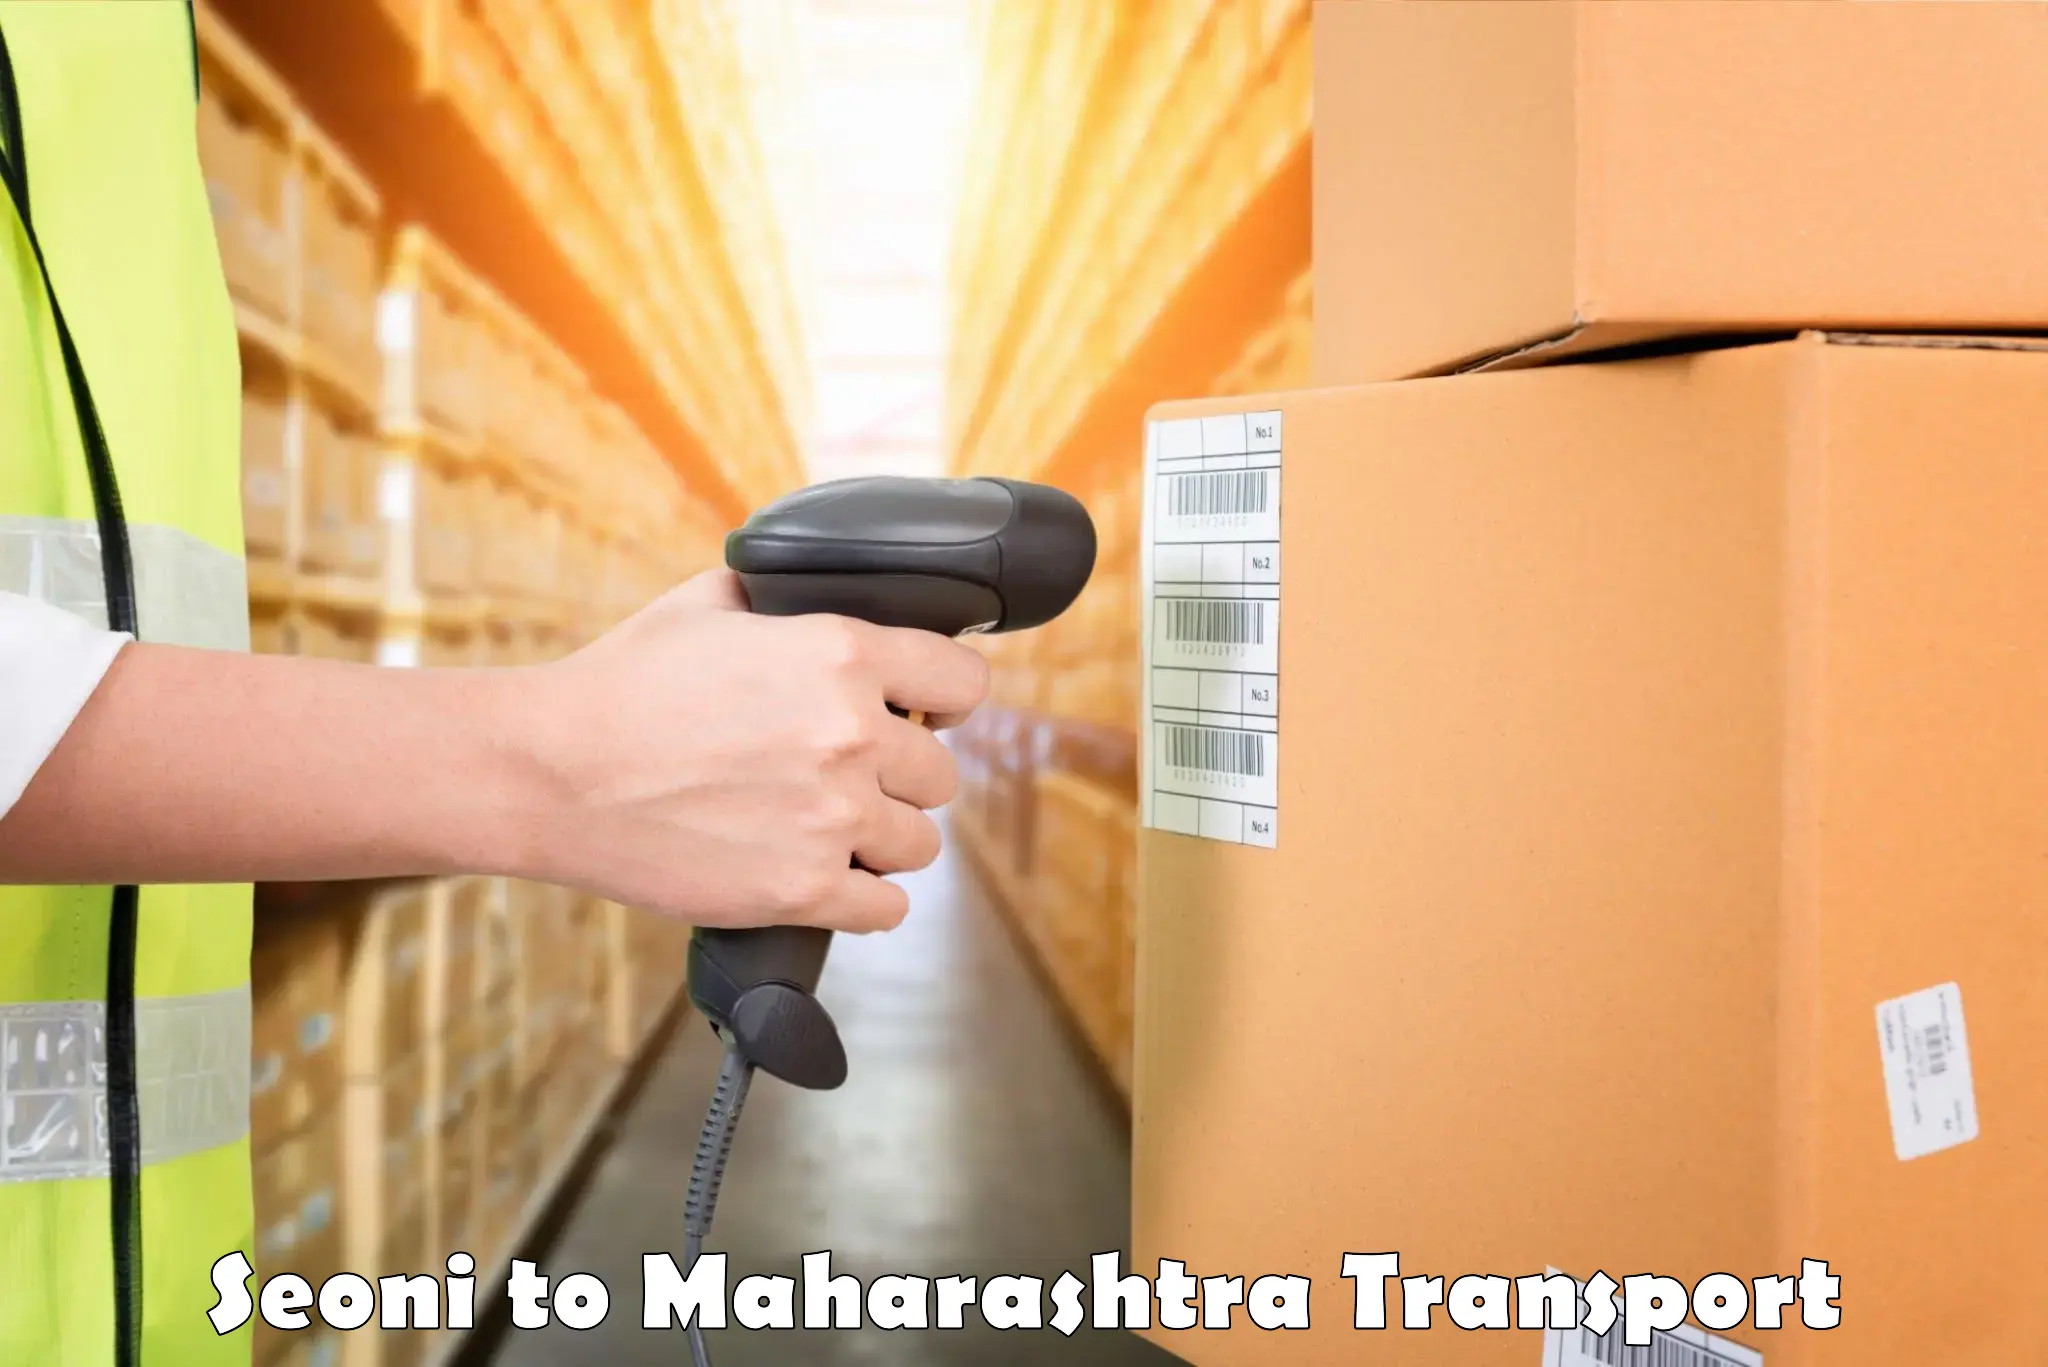 Shipping services in Seoni to Tata Institute of Social Sciences Mumbai